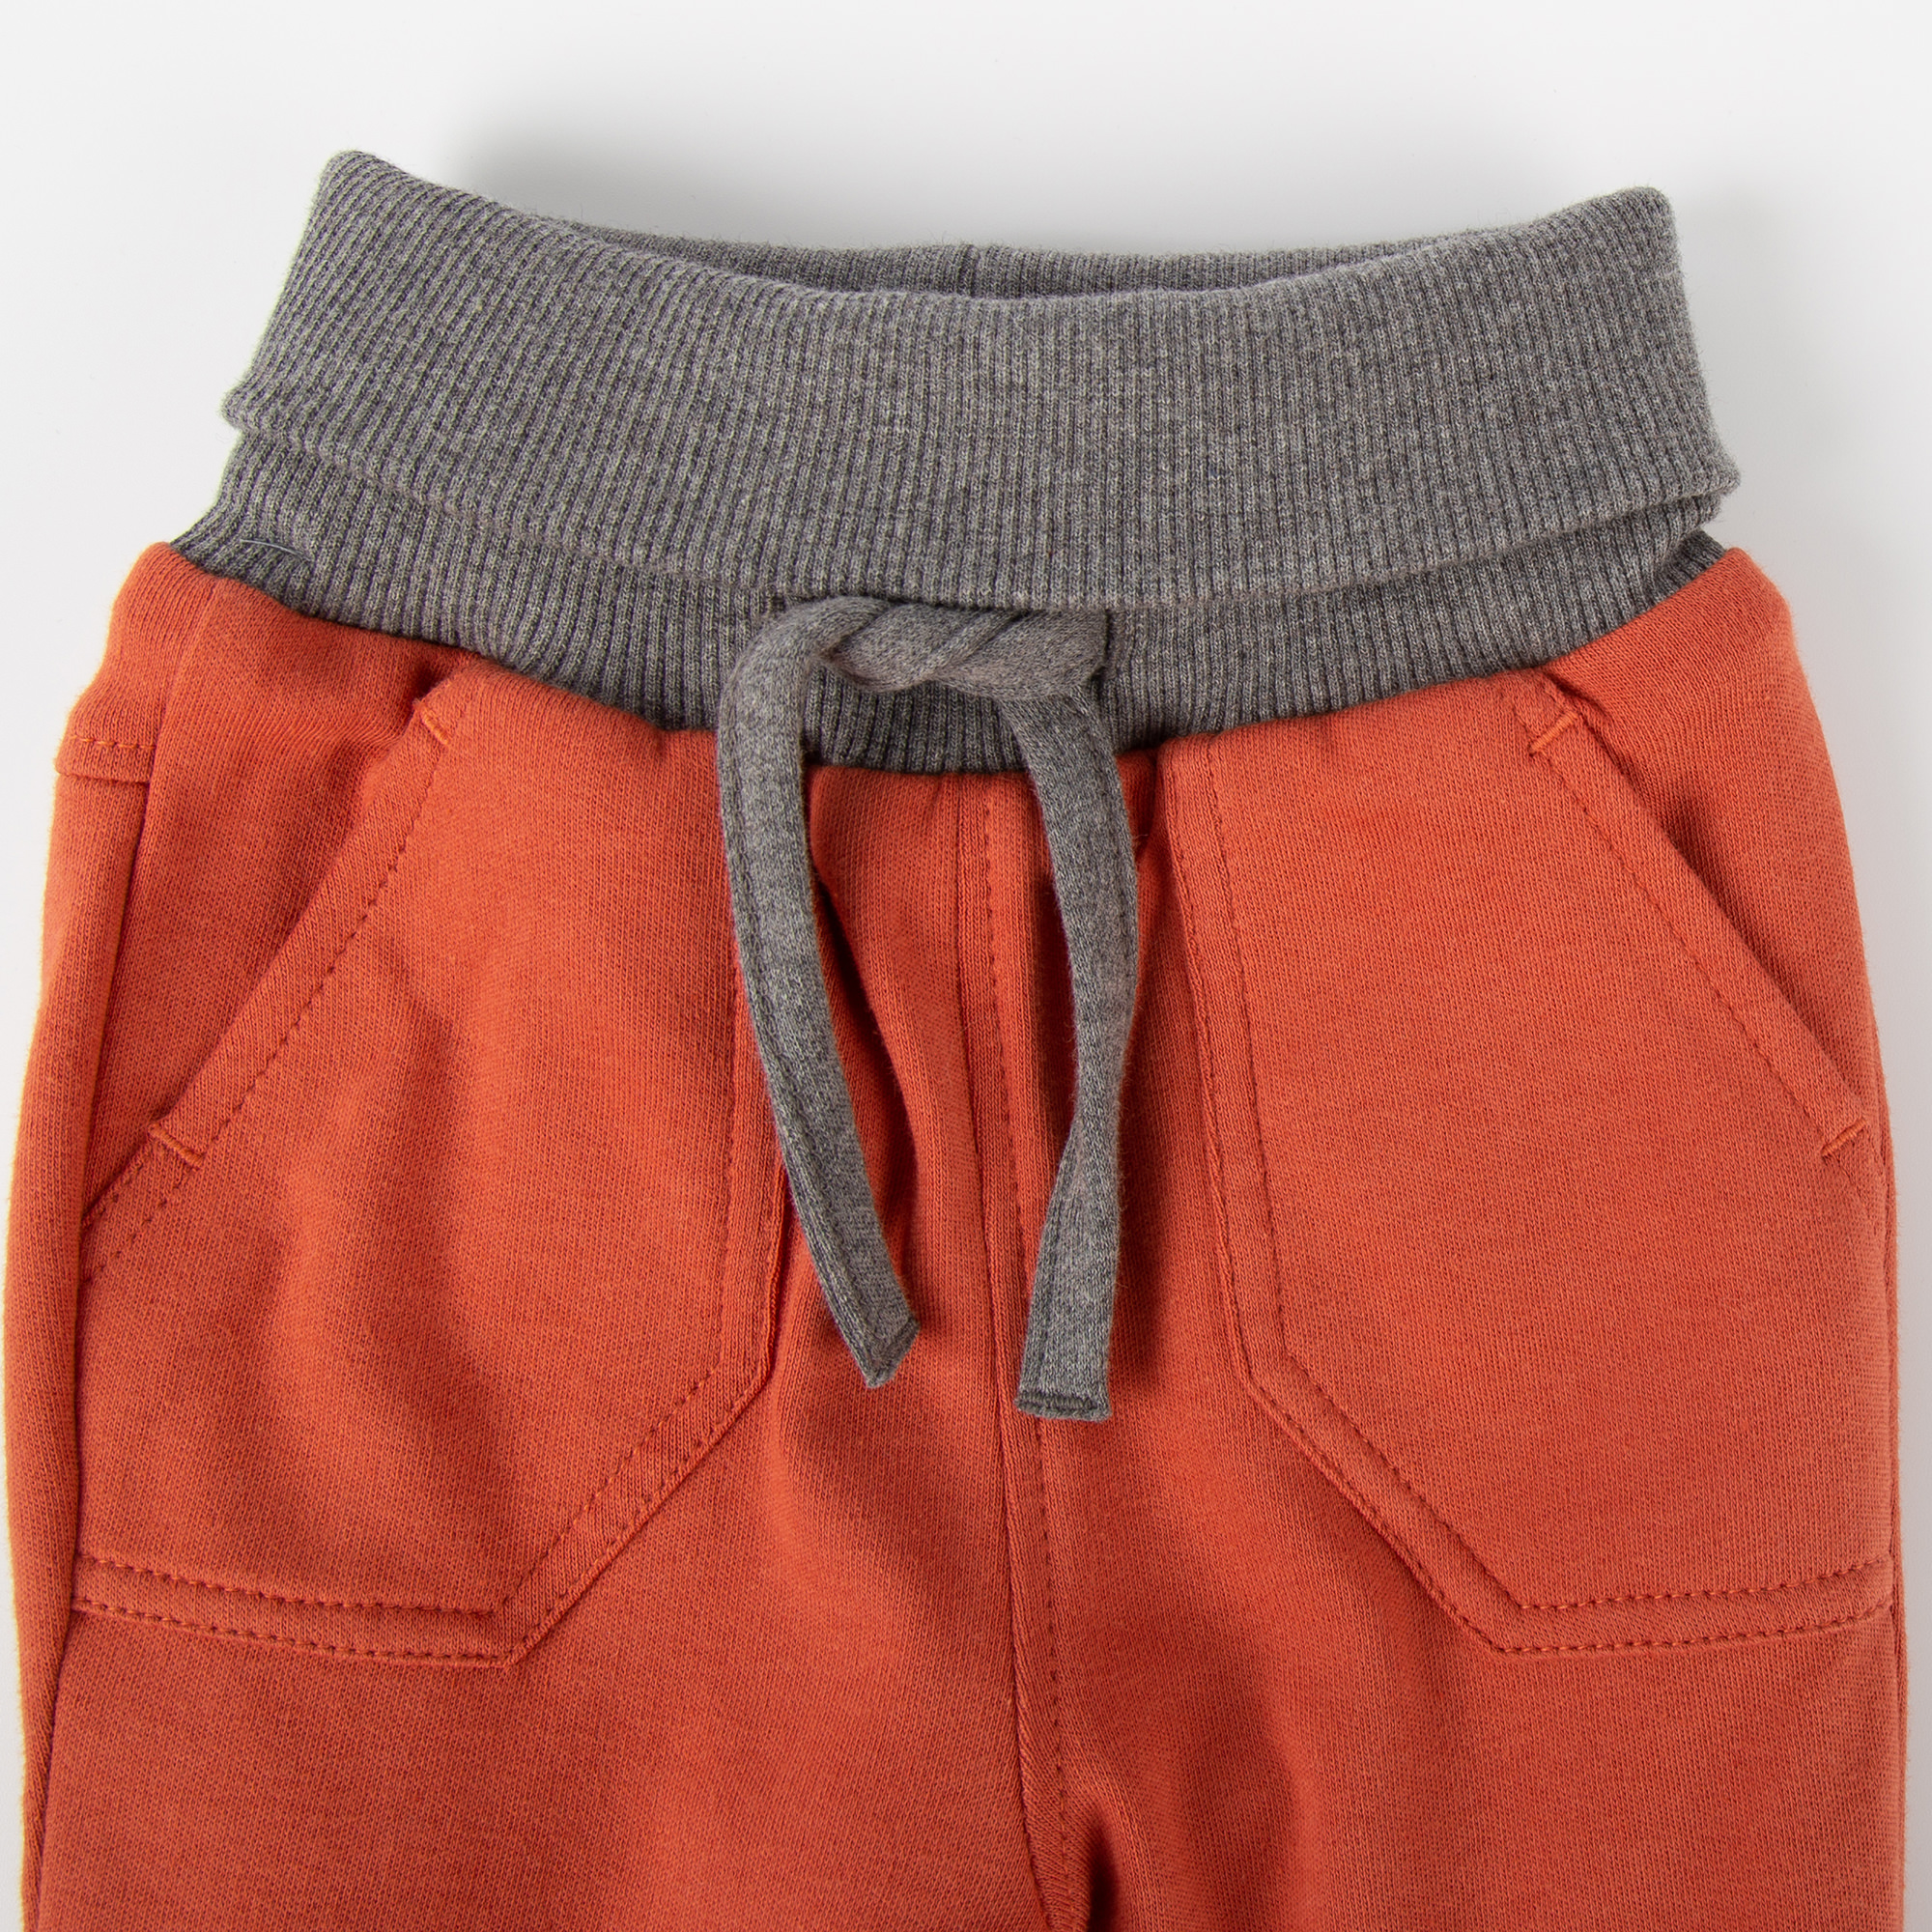 Reversible baby soft pants, double-layered, grey/orange